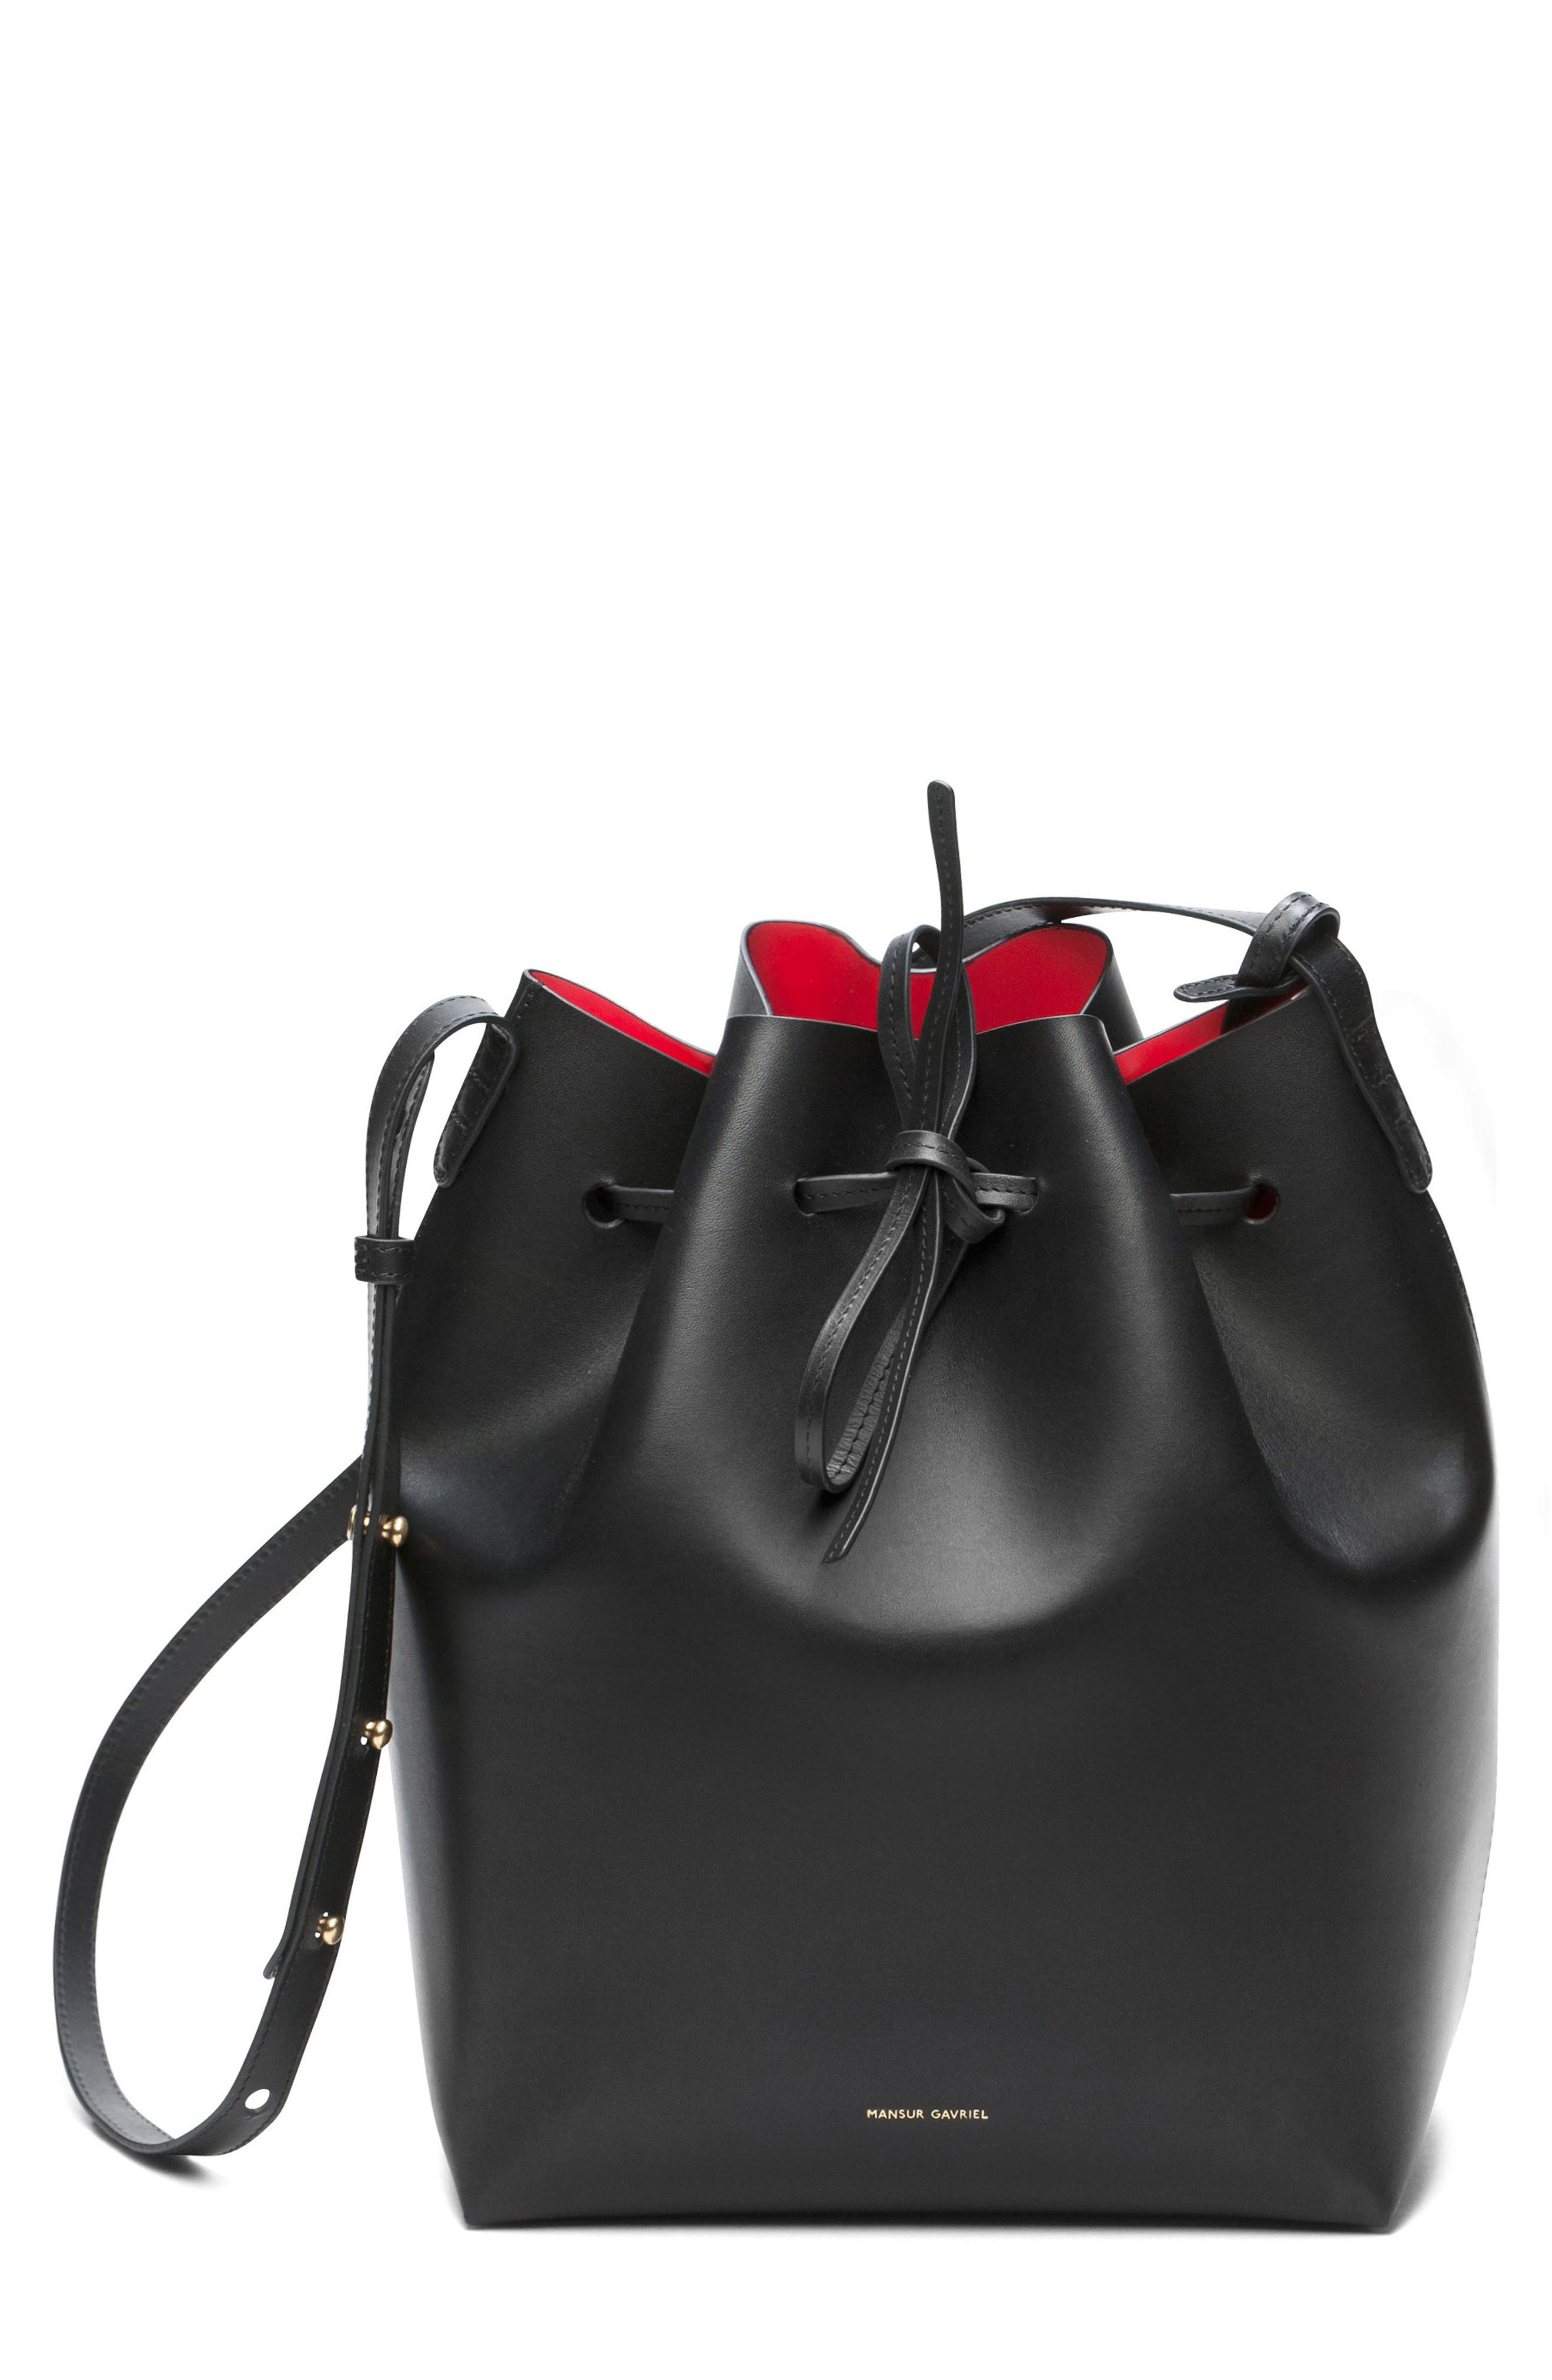 Mansur Gavriel Leather Bucket Bag in Cammello/Rosa